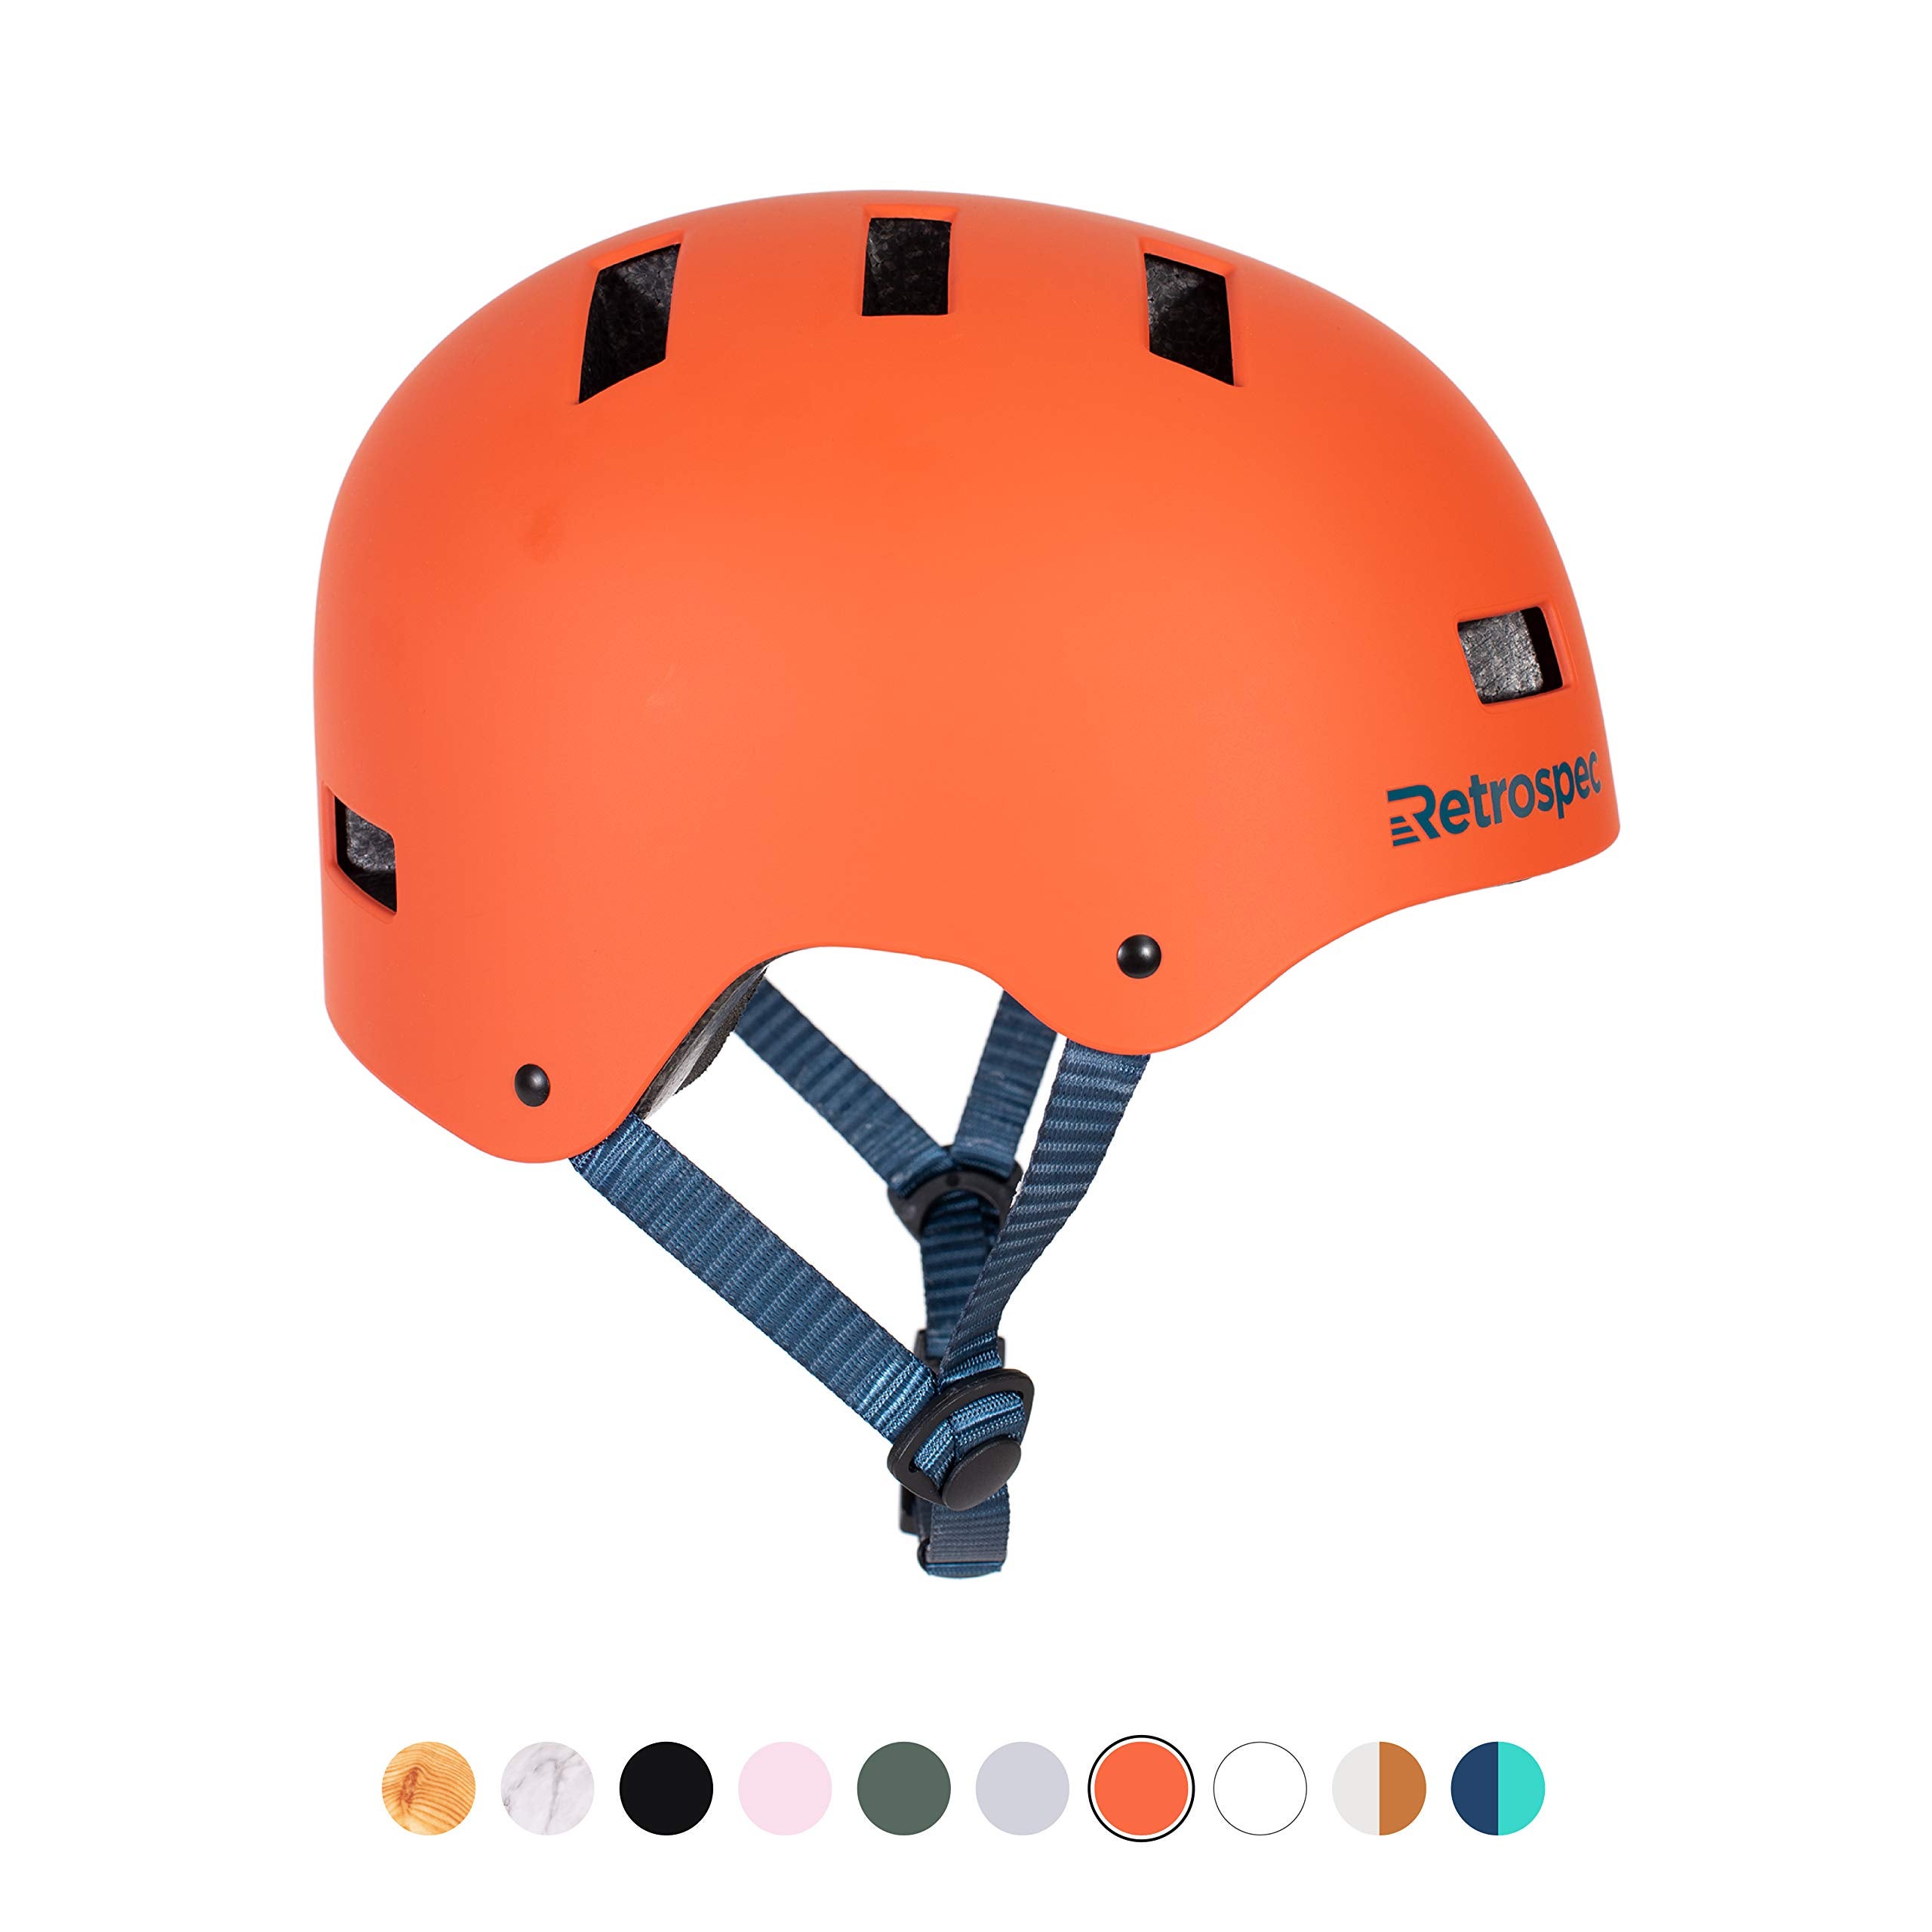 Retrospec Cm-1 Classic Commuter Bike Skate Ski Scooter Helmet Size L A1 for sale online